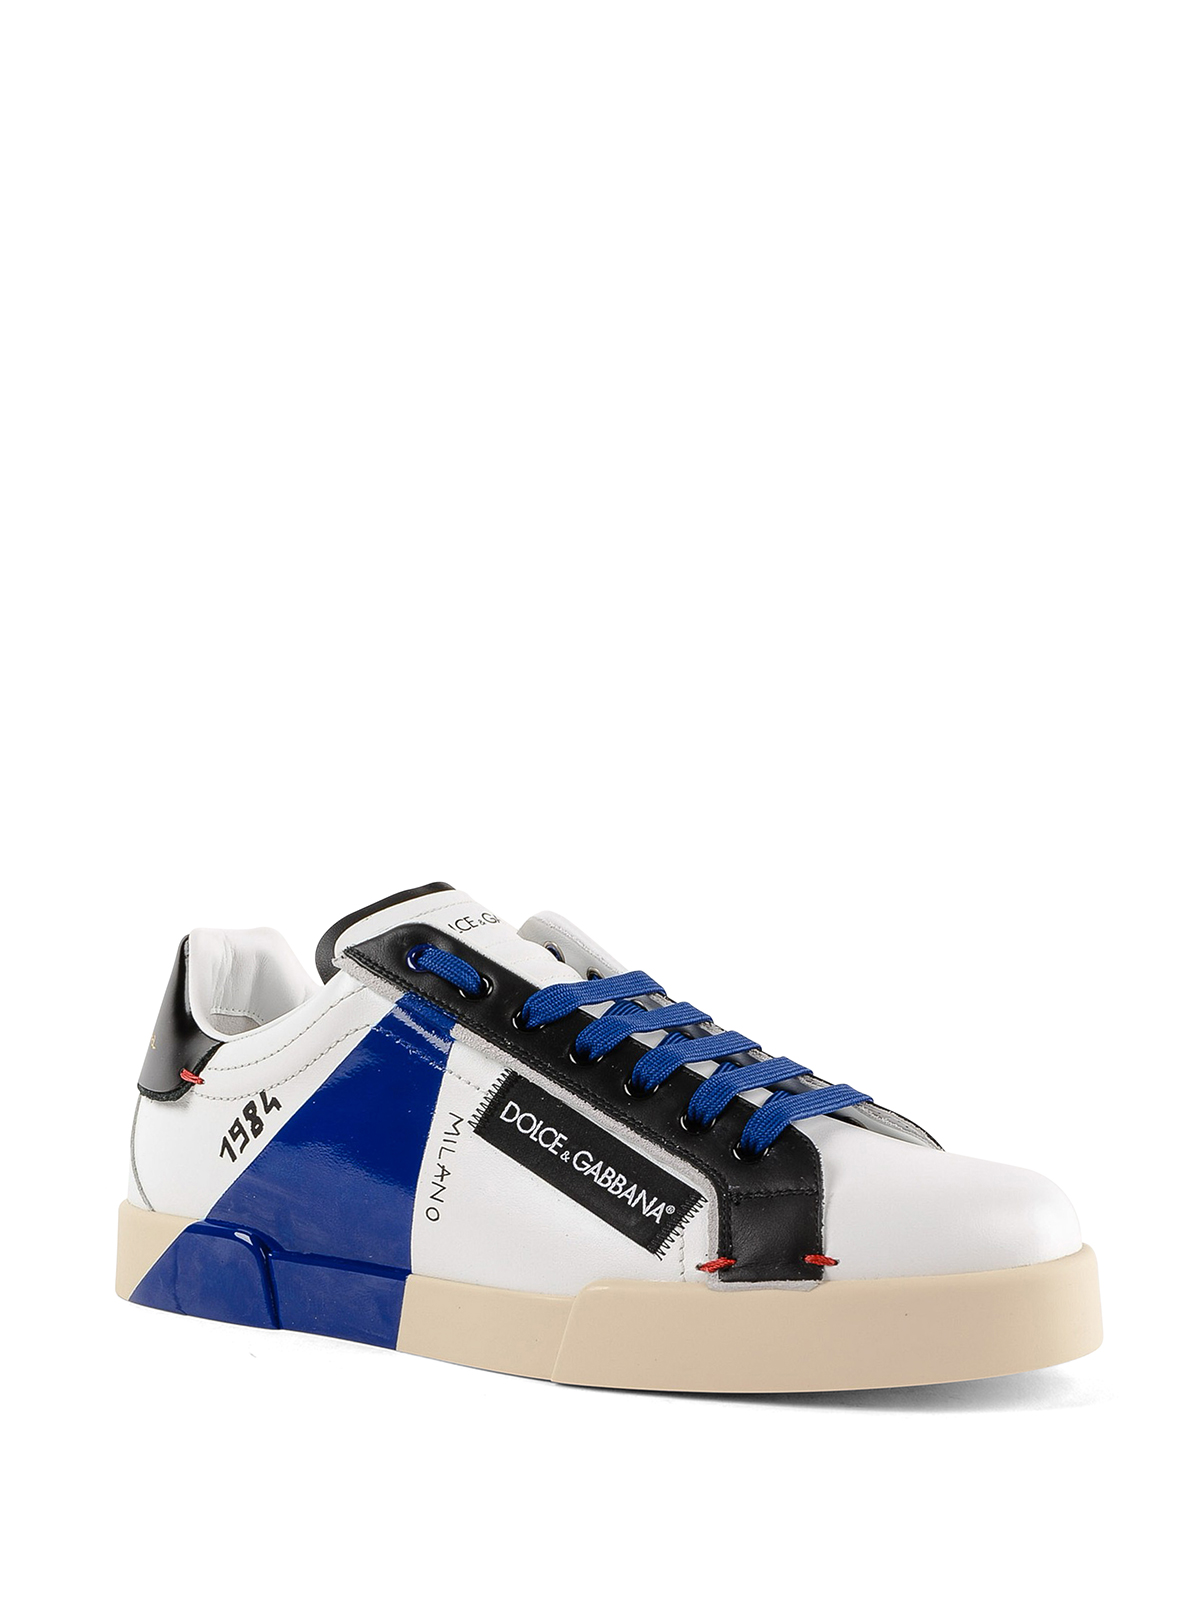 dolce gabbana sneakers blue